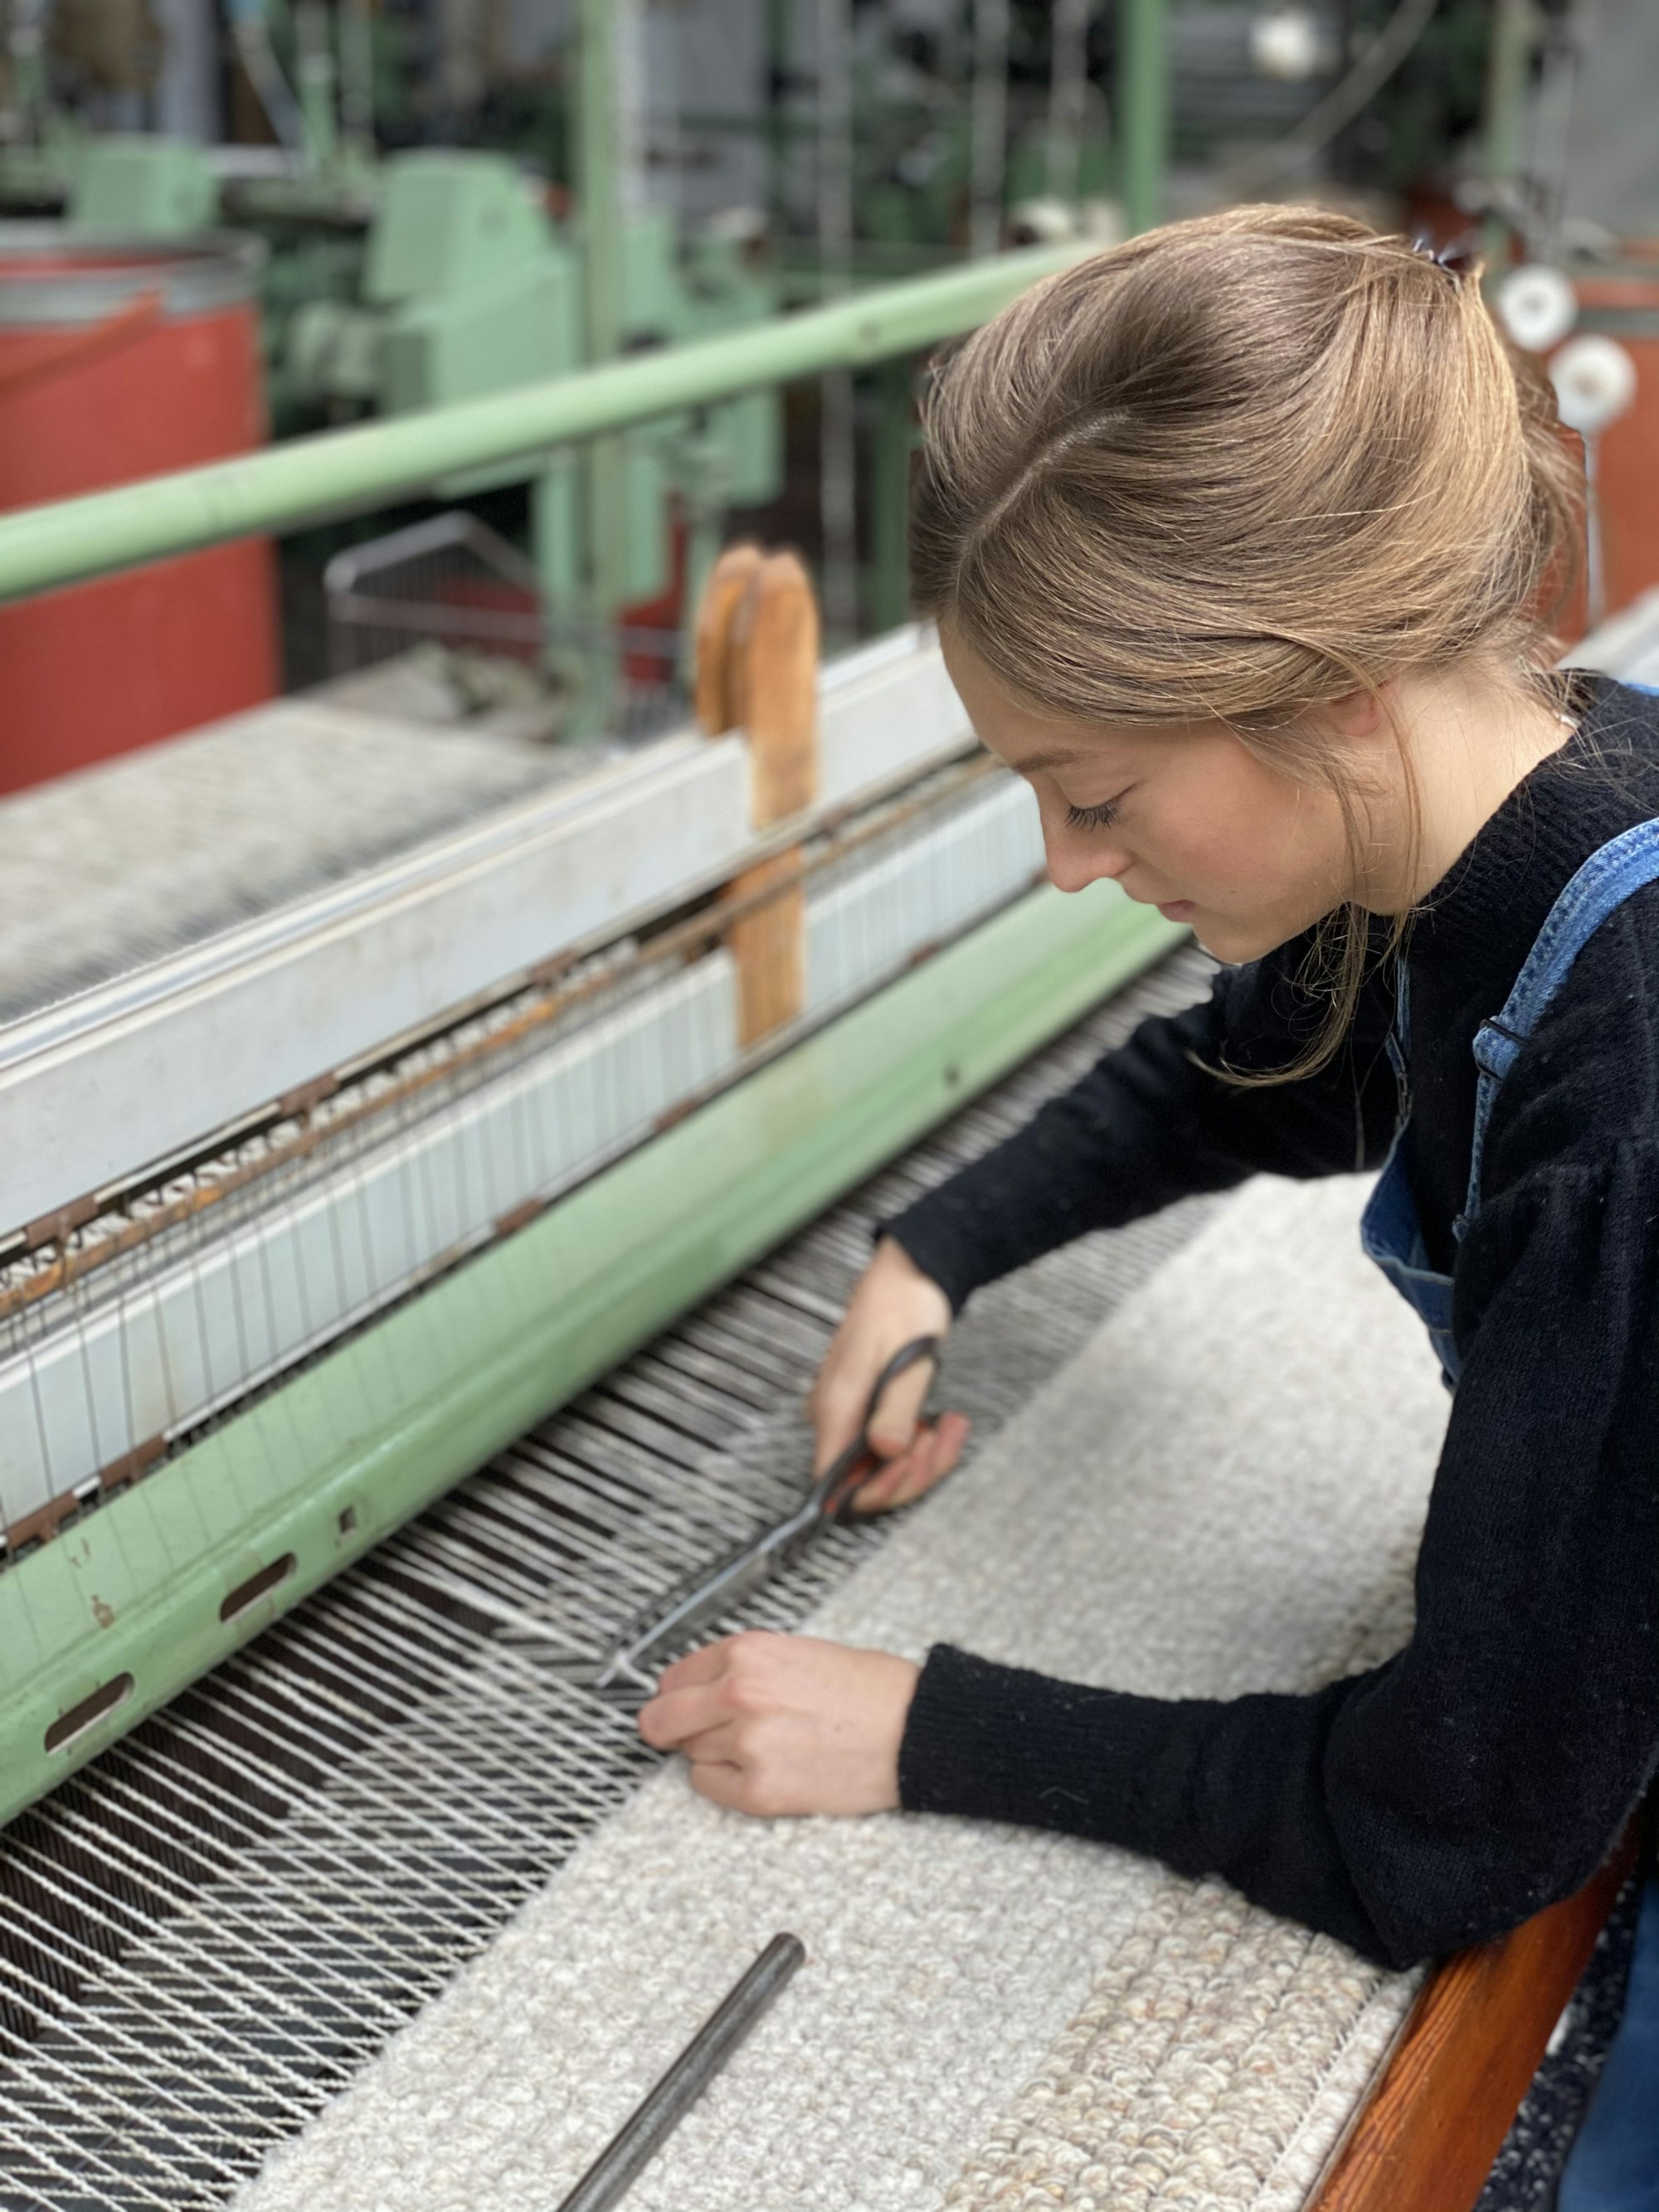 Woven Connection - Weaving process ©️ Delphine Cobbaert